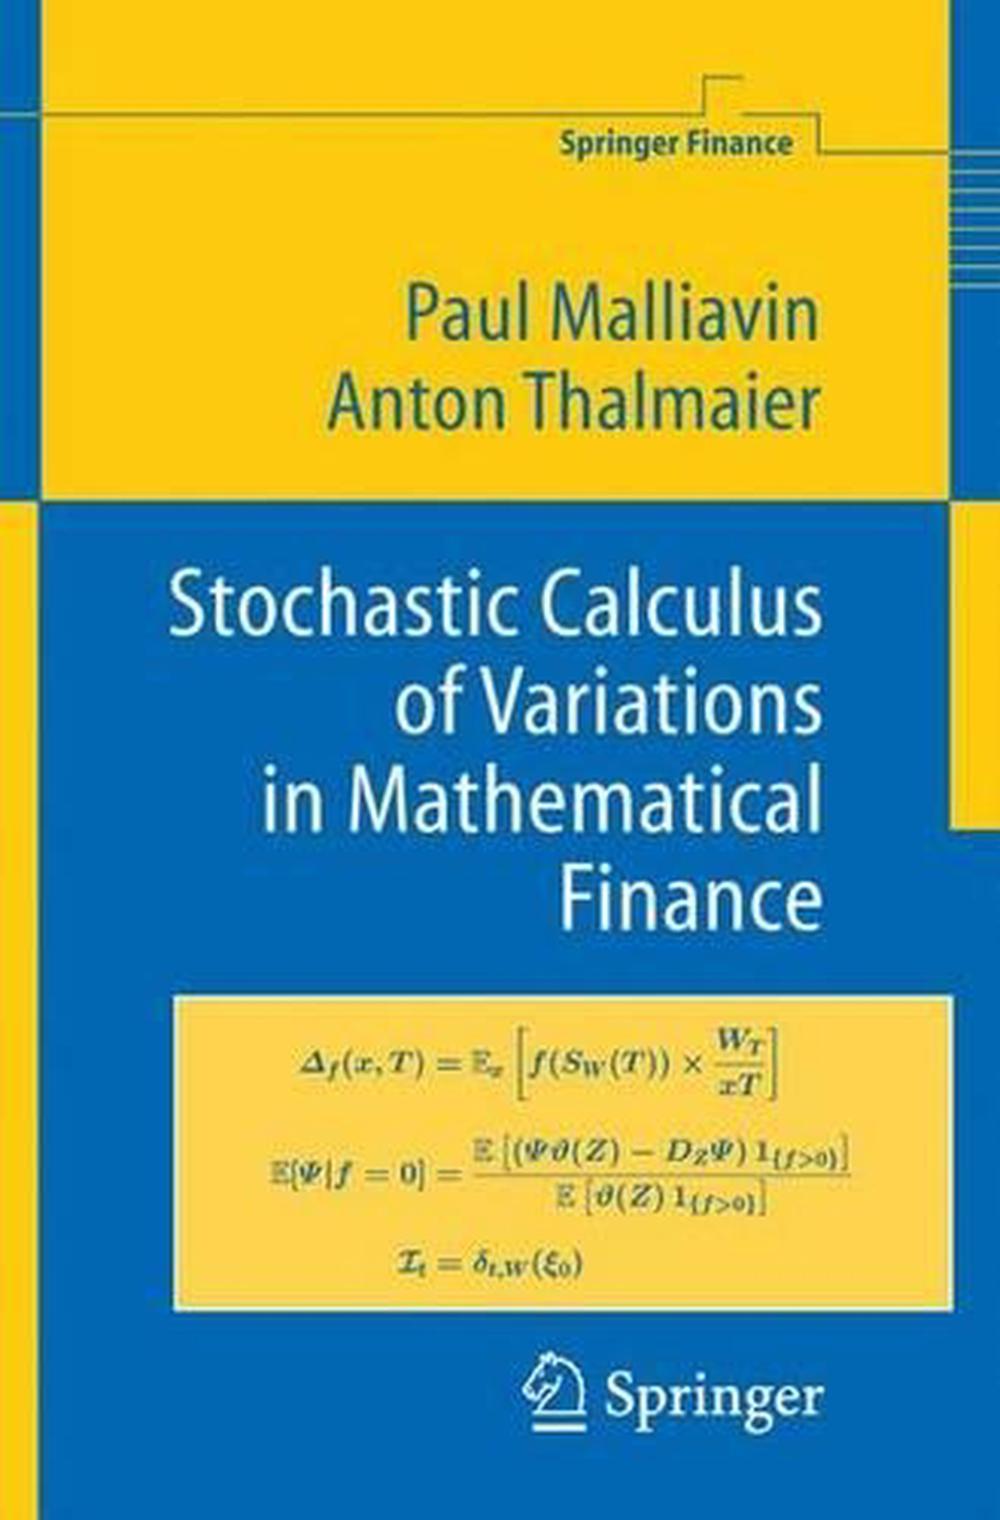 mathematica for finance